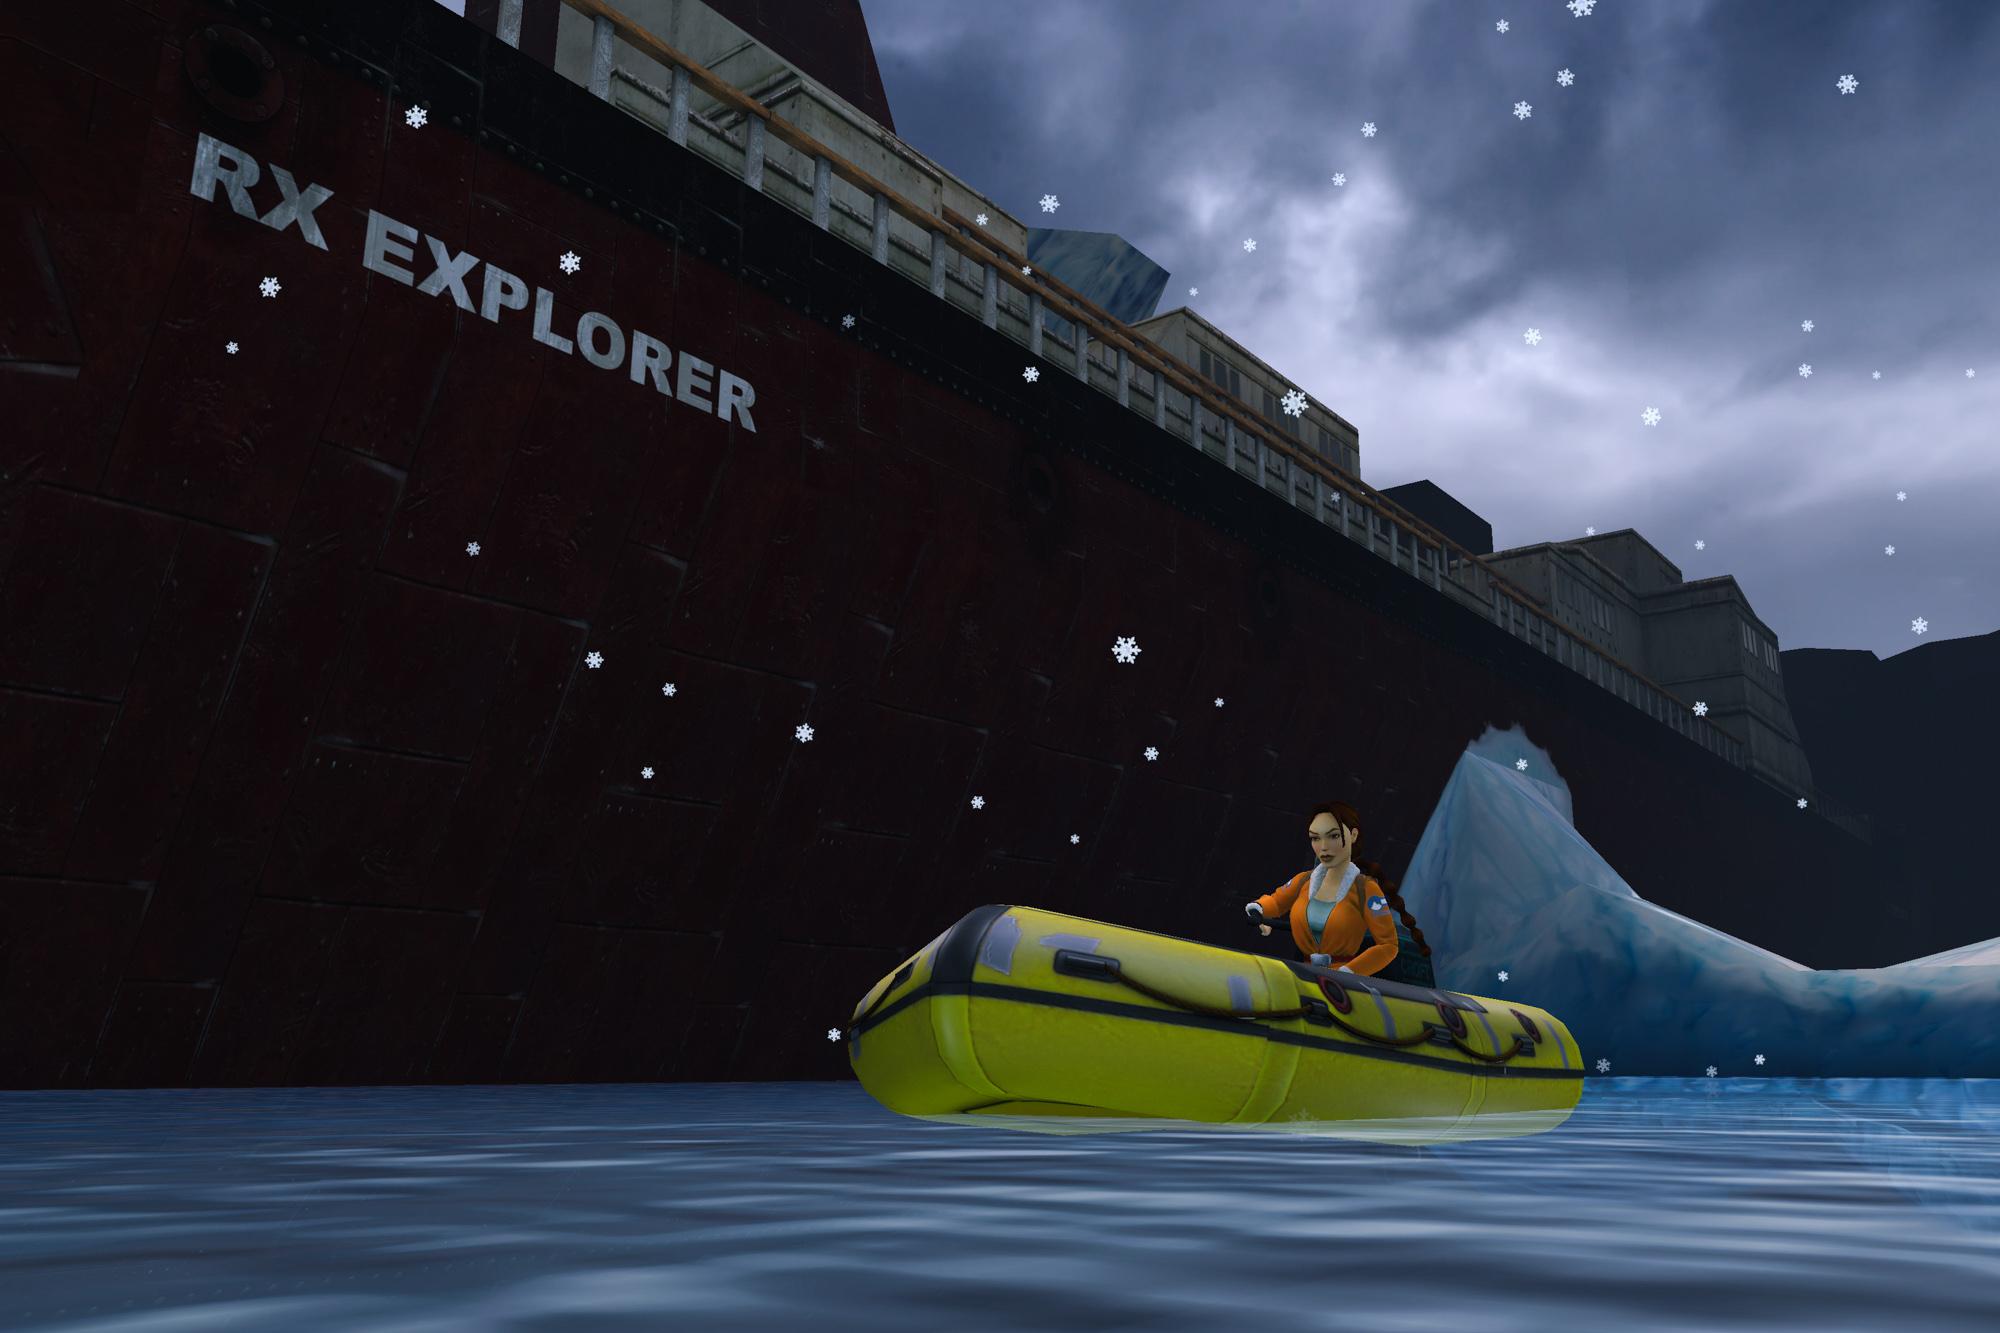 Lara in a dinghy in Antarctica next to the RX Explorer ship